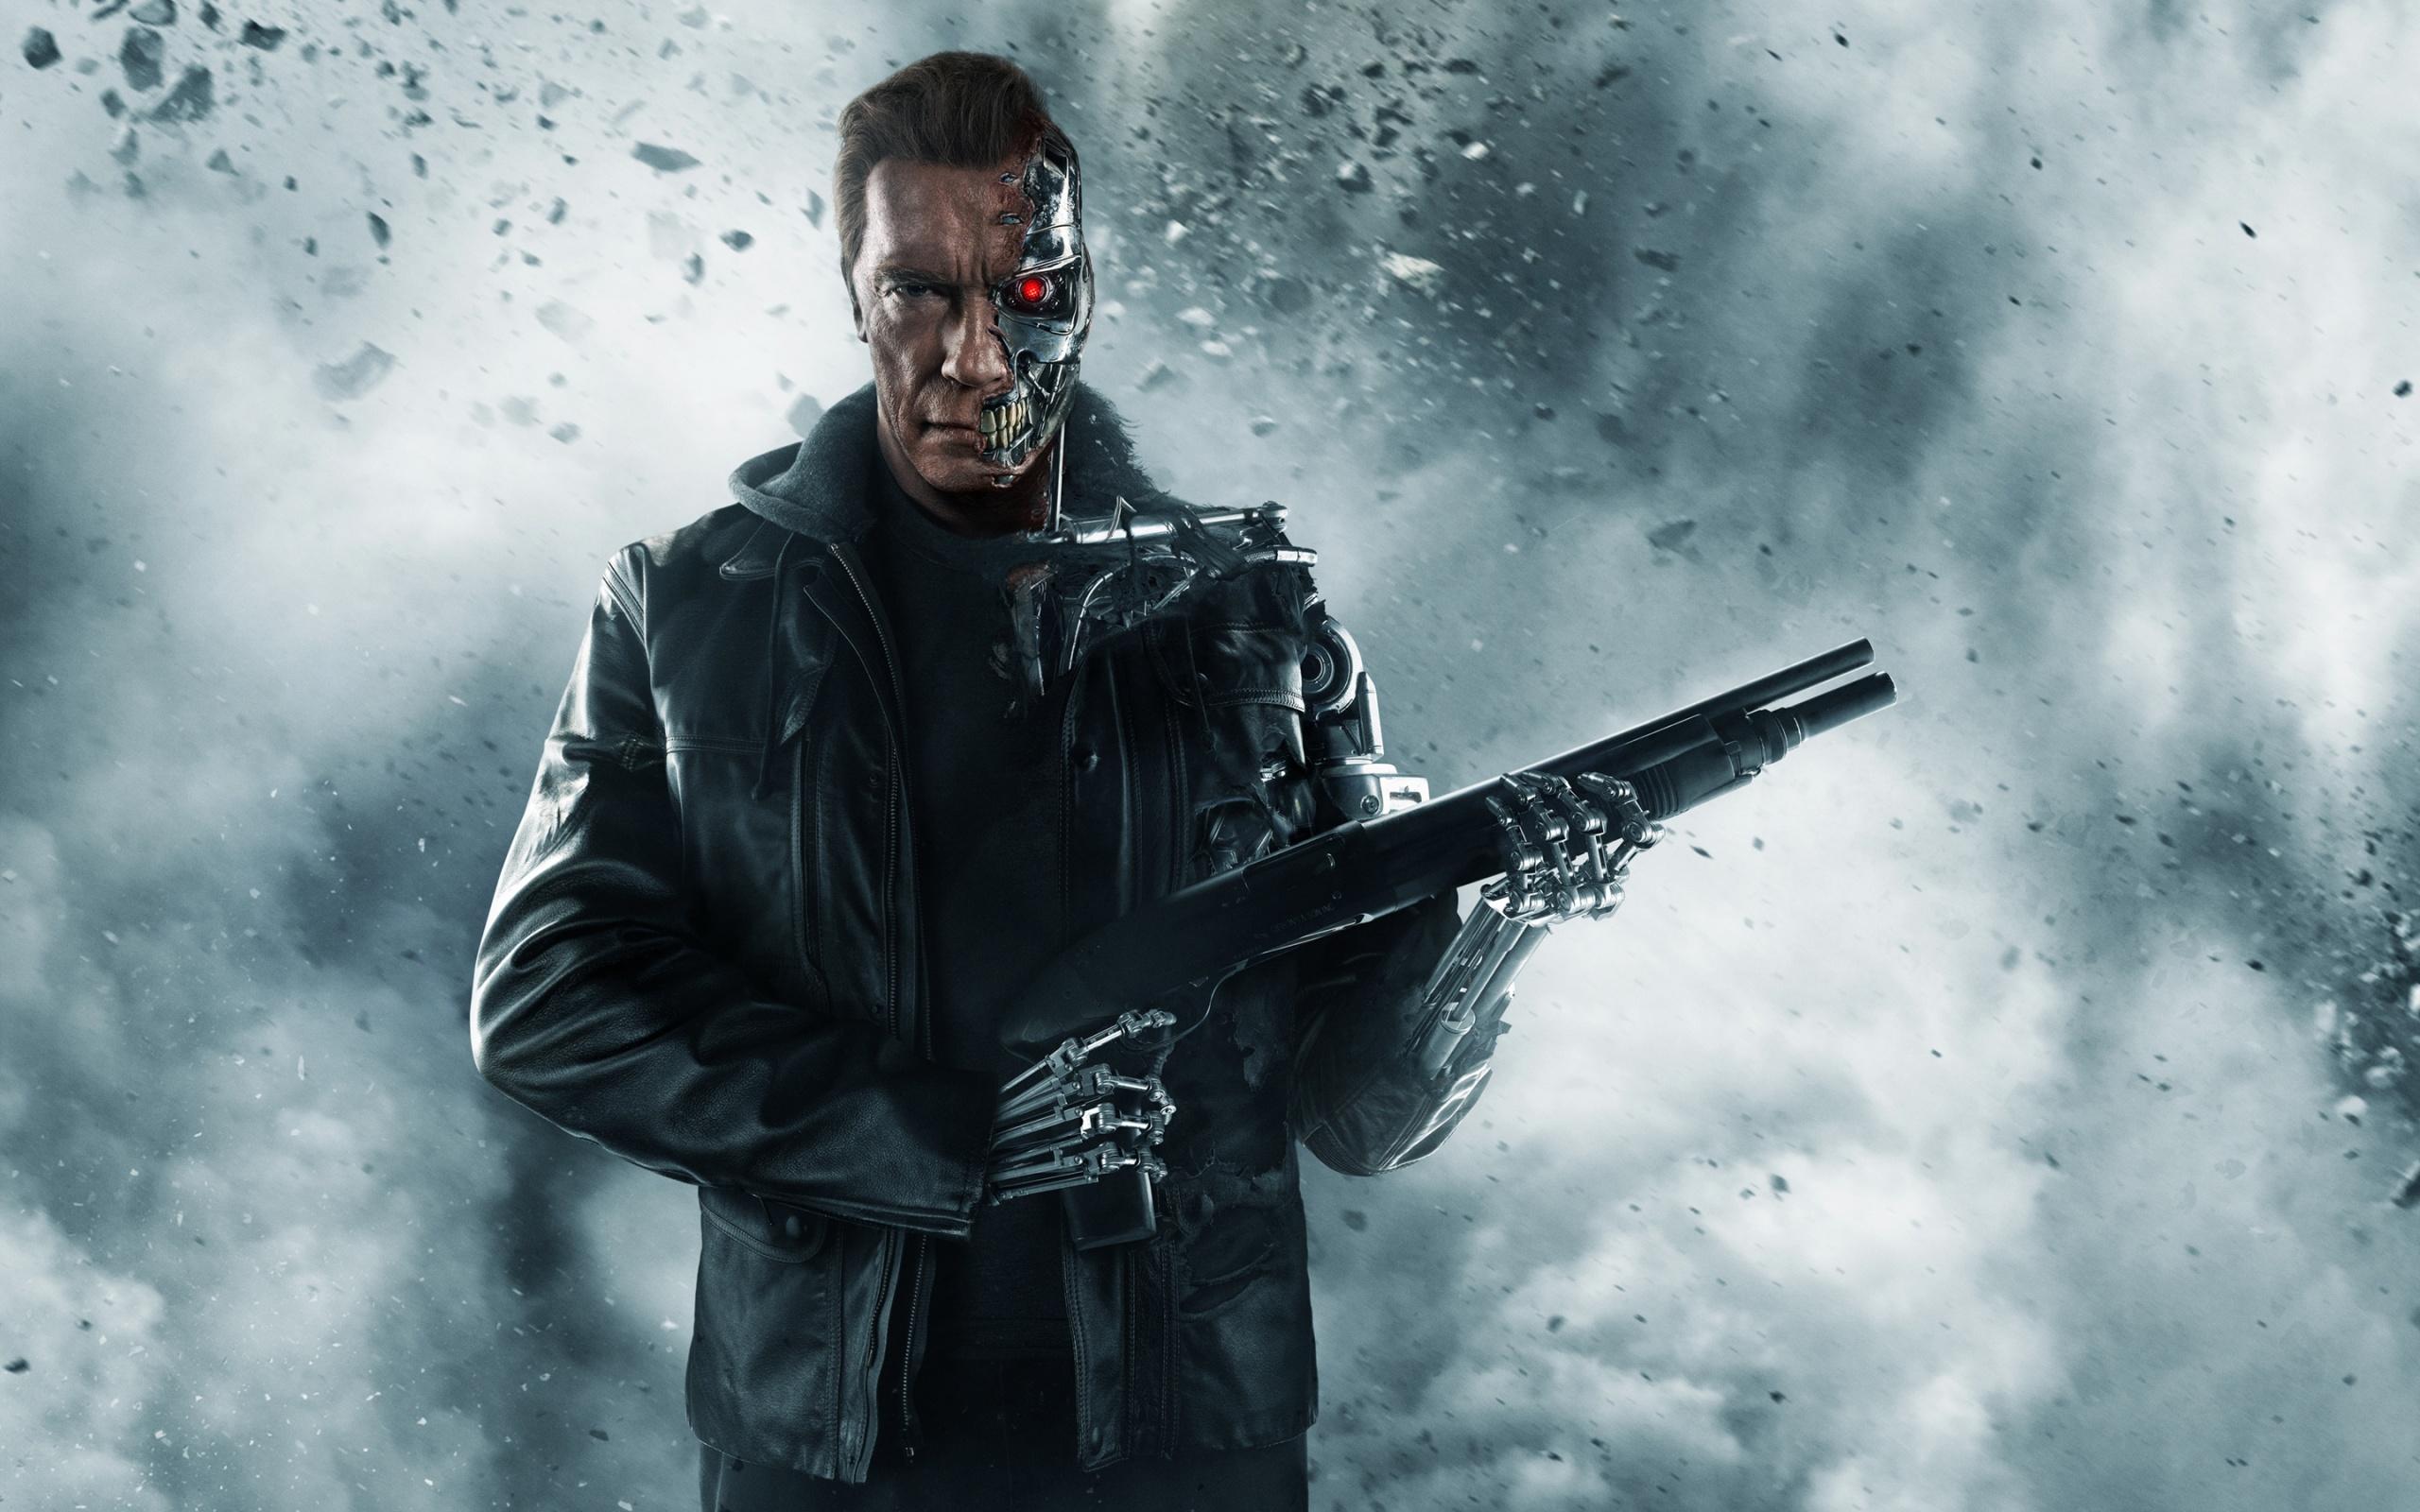 Arnold Schwarzenegger Terminator Wallpaper in jpg format for free